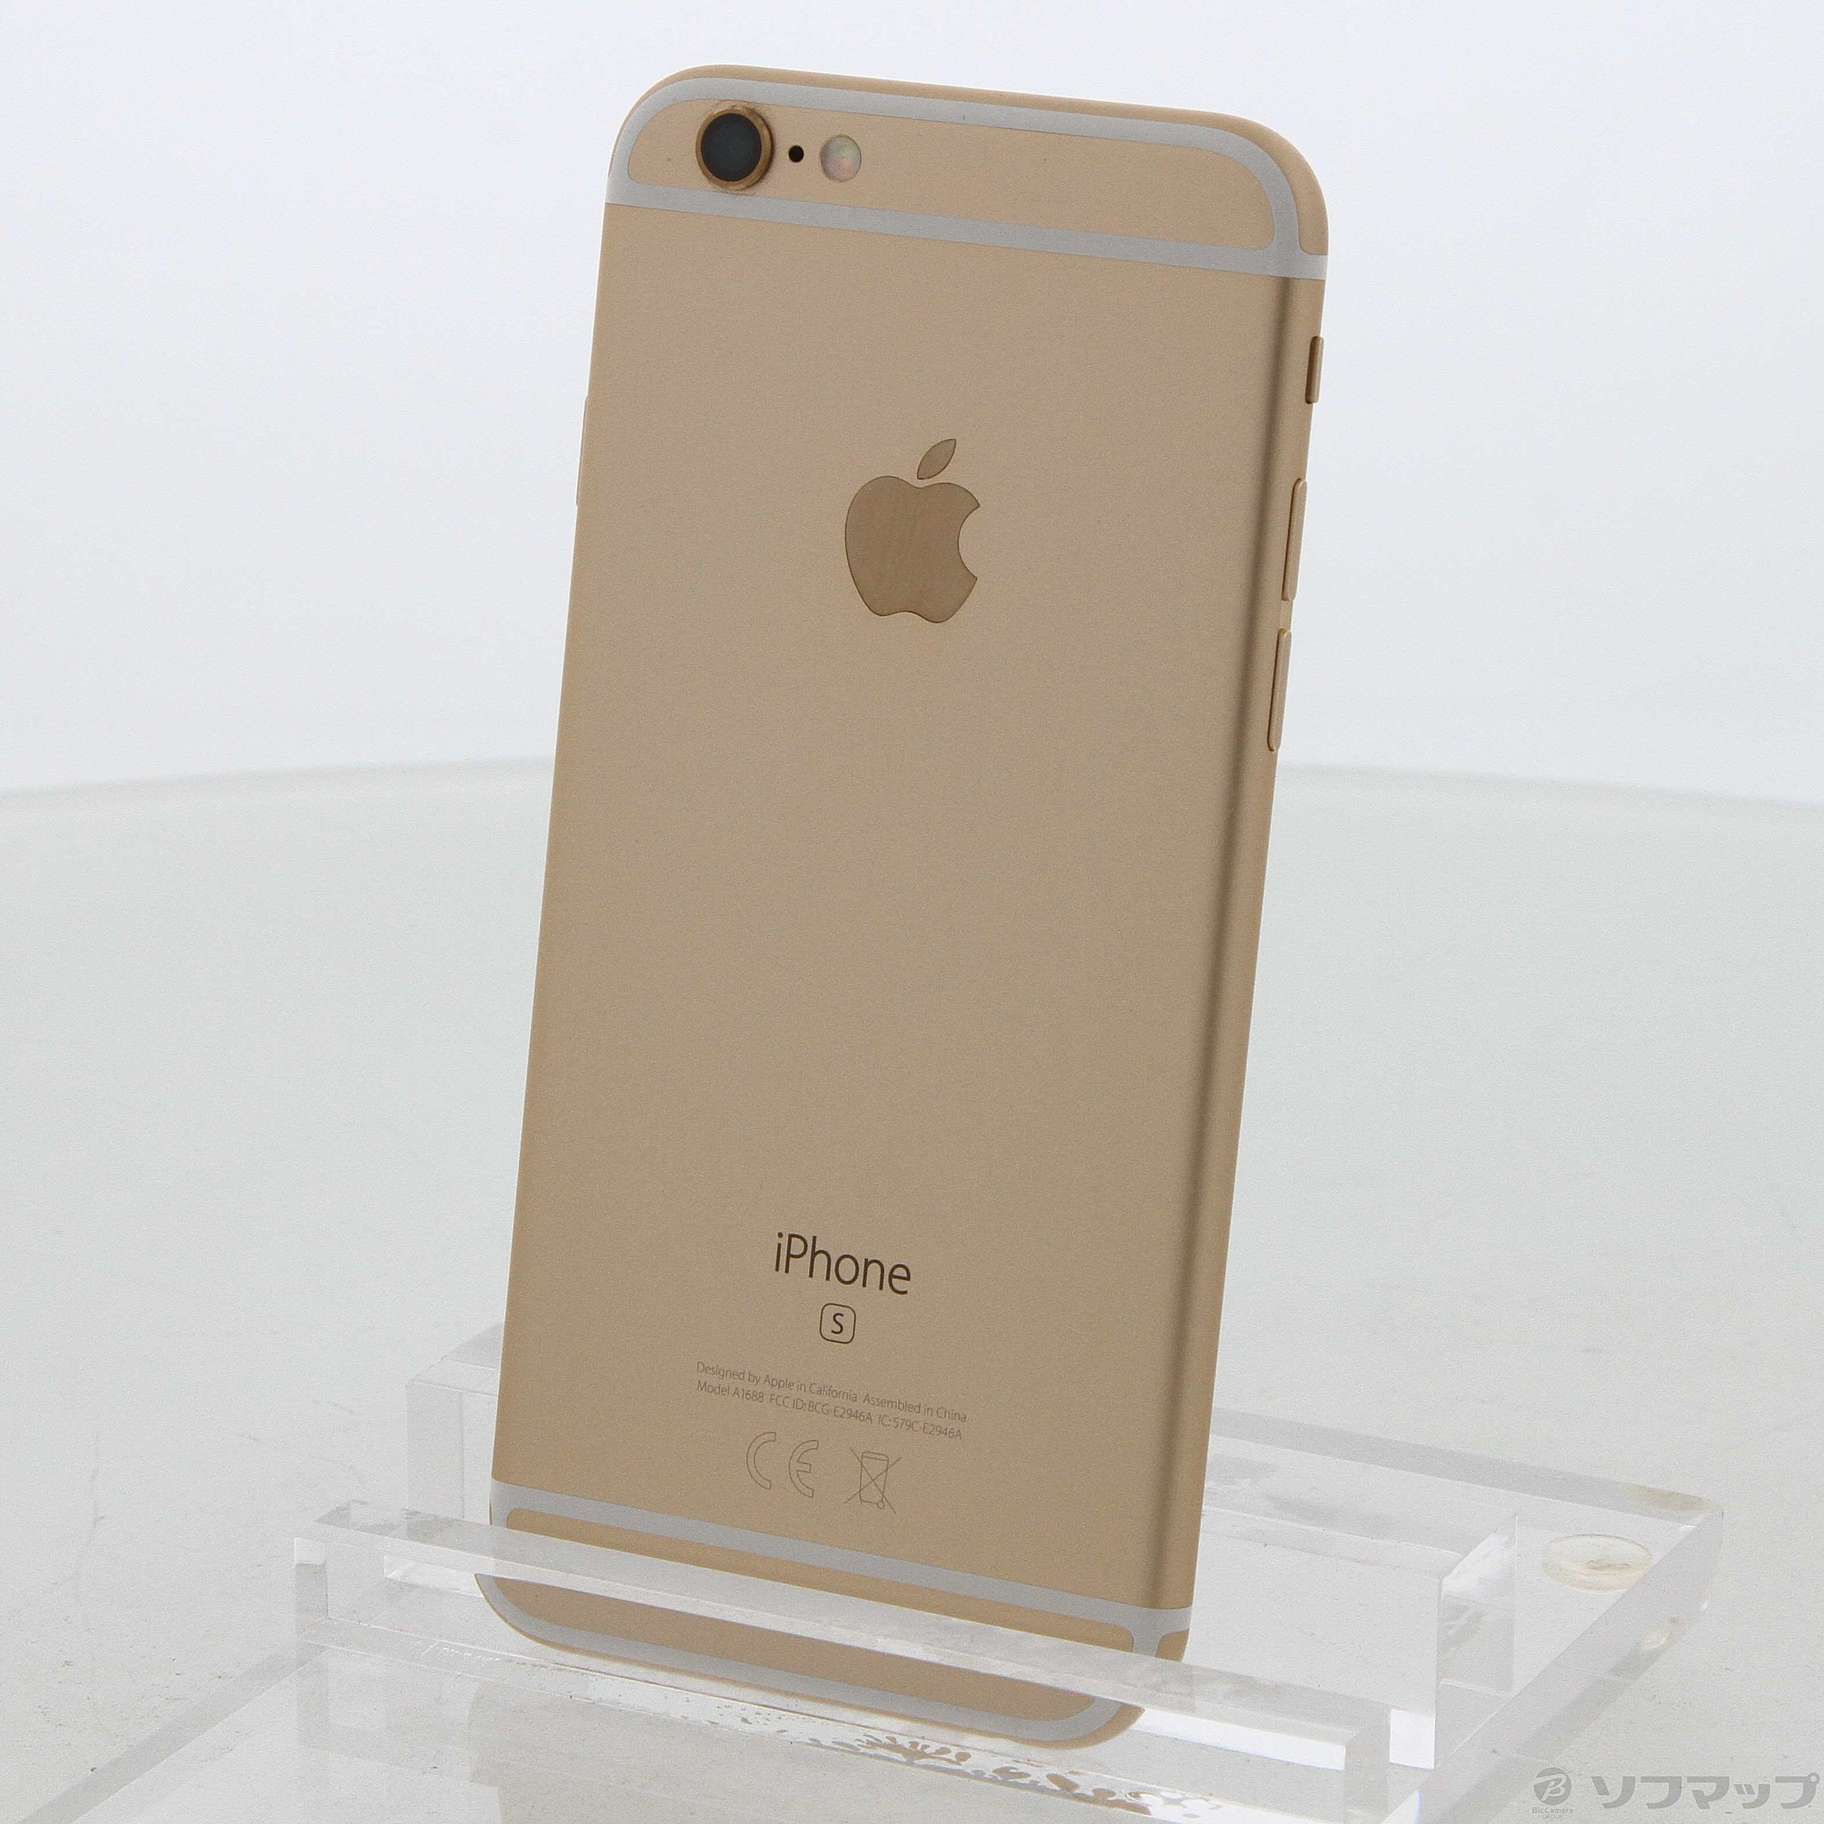 新品 未使用 iPhone 6s Gold 32GB SIMフリー - www.sorbillomenu.com